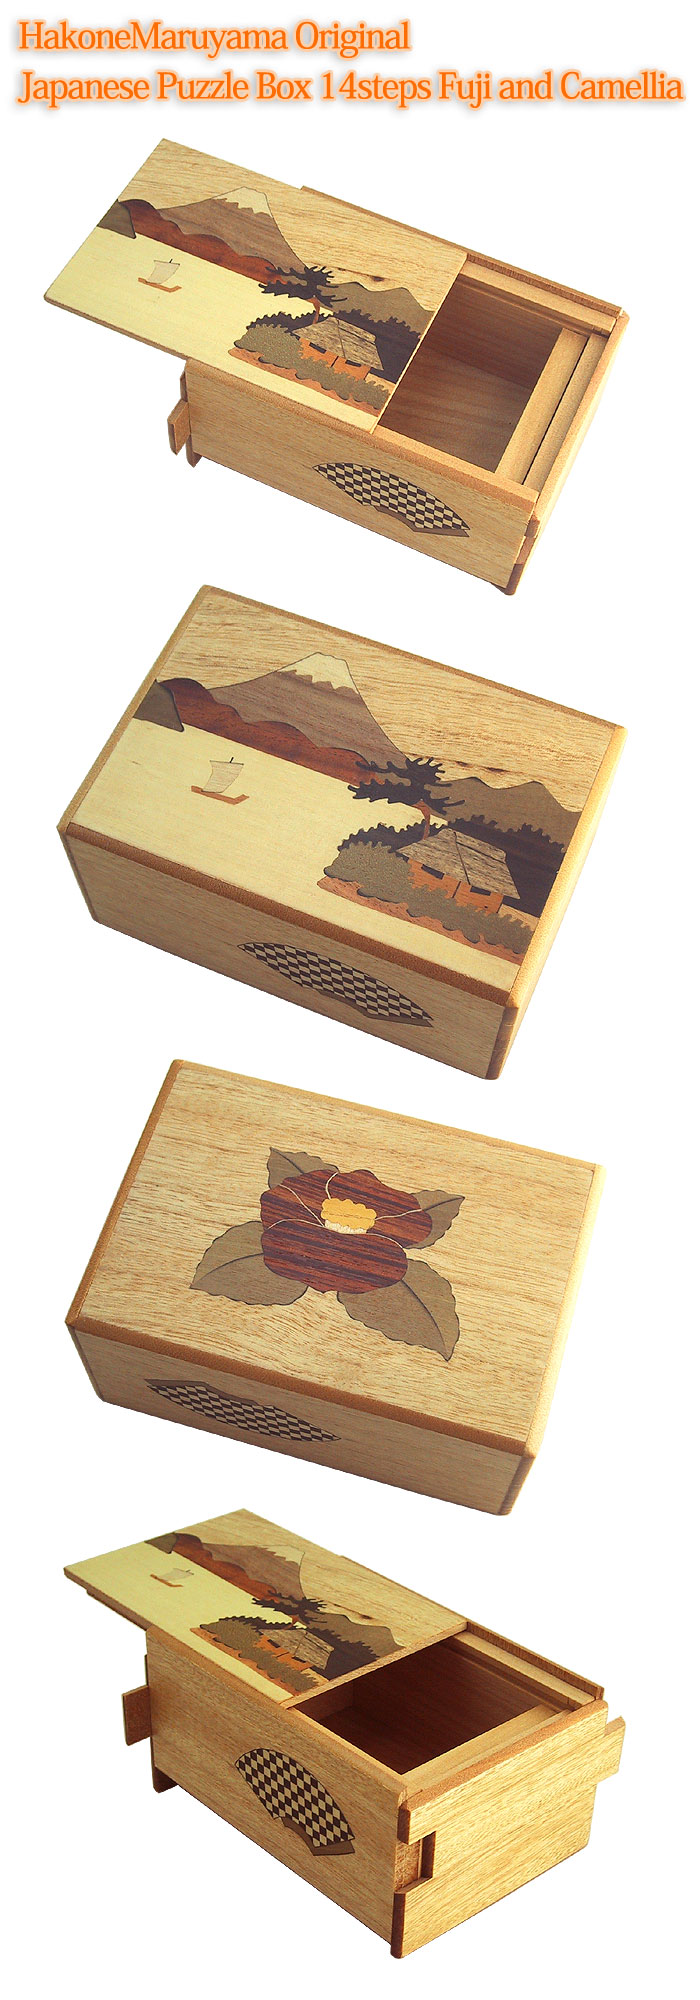 Japanese Puzzle Box 14steps Fuji and Camellia